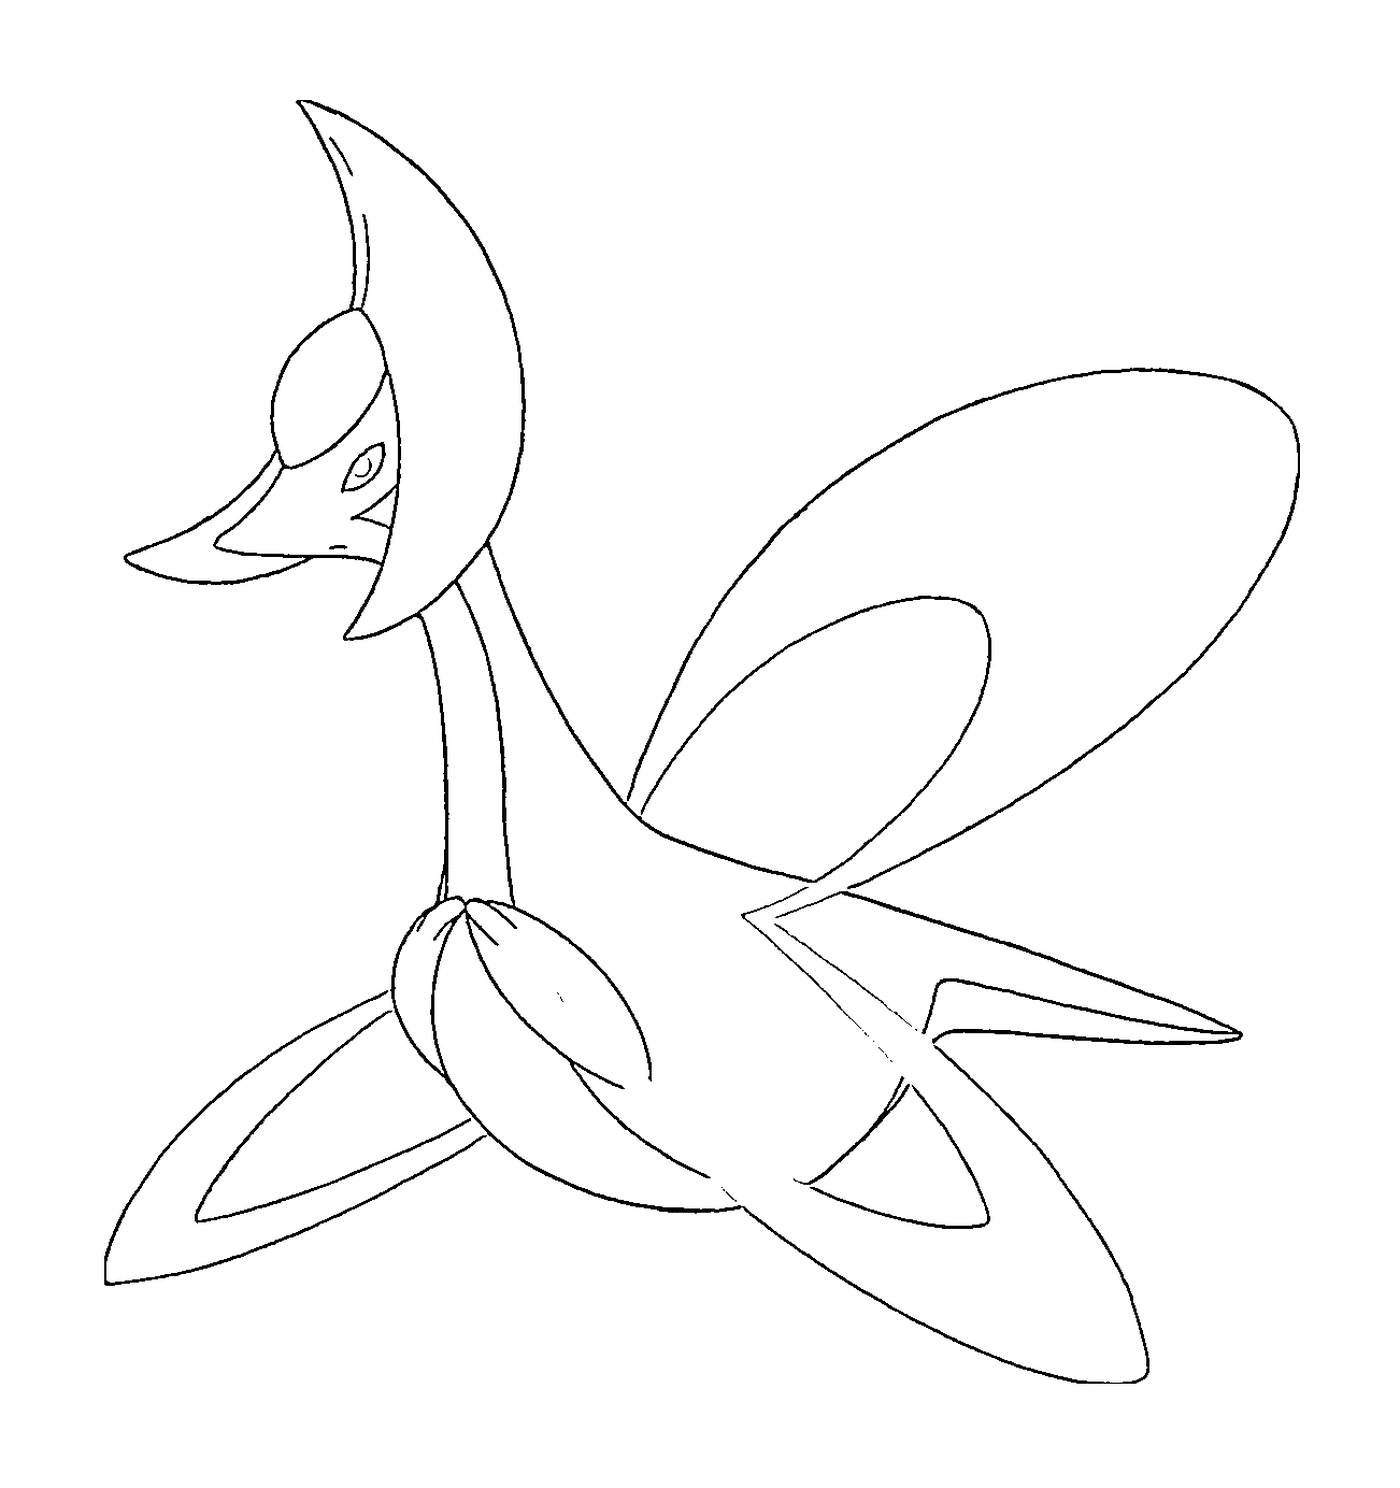  Crasselia bird with long tail 